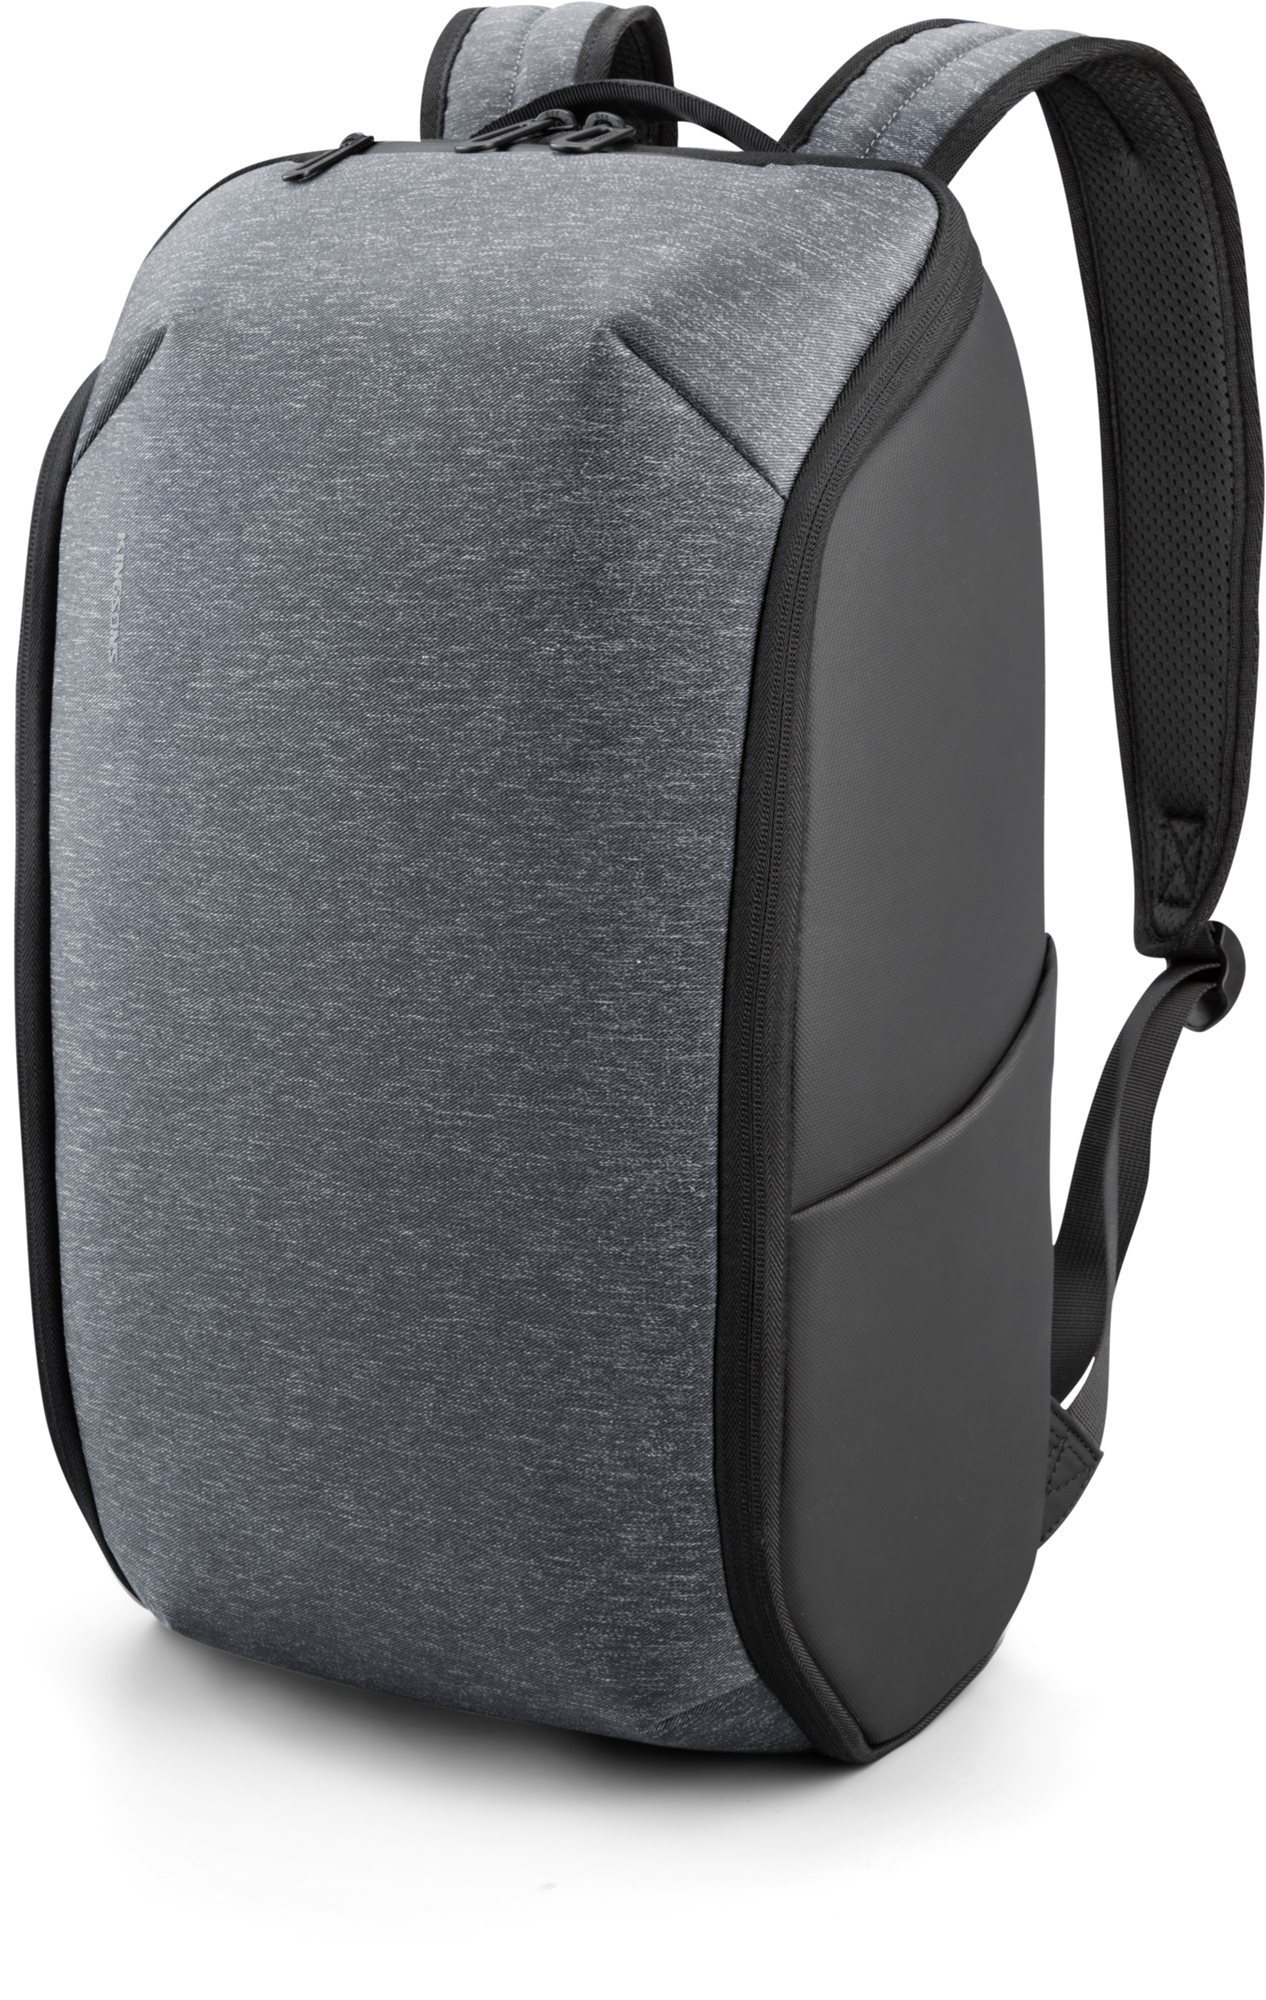 Kingsons City Commuter Laptop Backpack 15.6